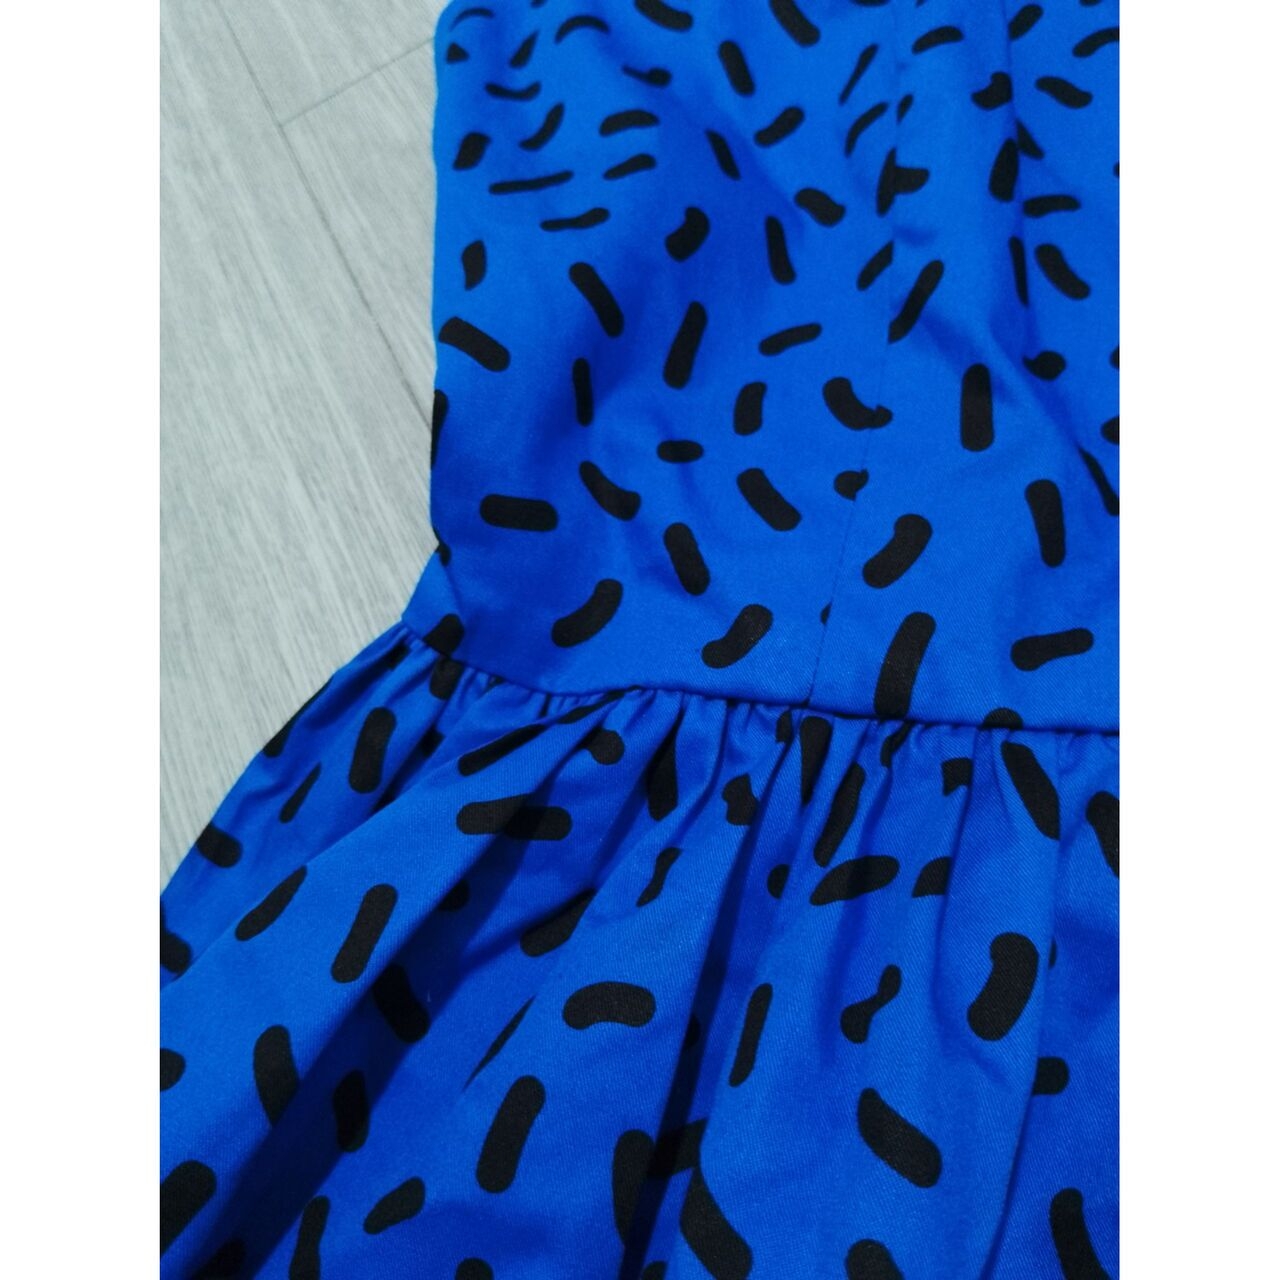 Gorman X Walala Blue Pop Art Sprinkle Dress